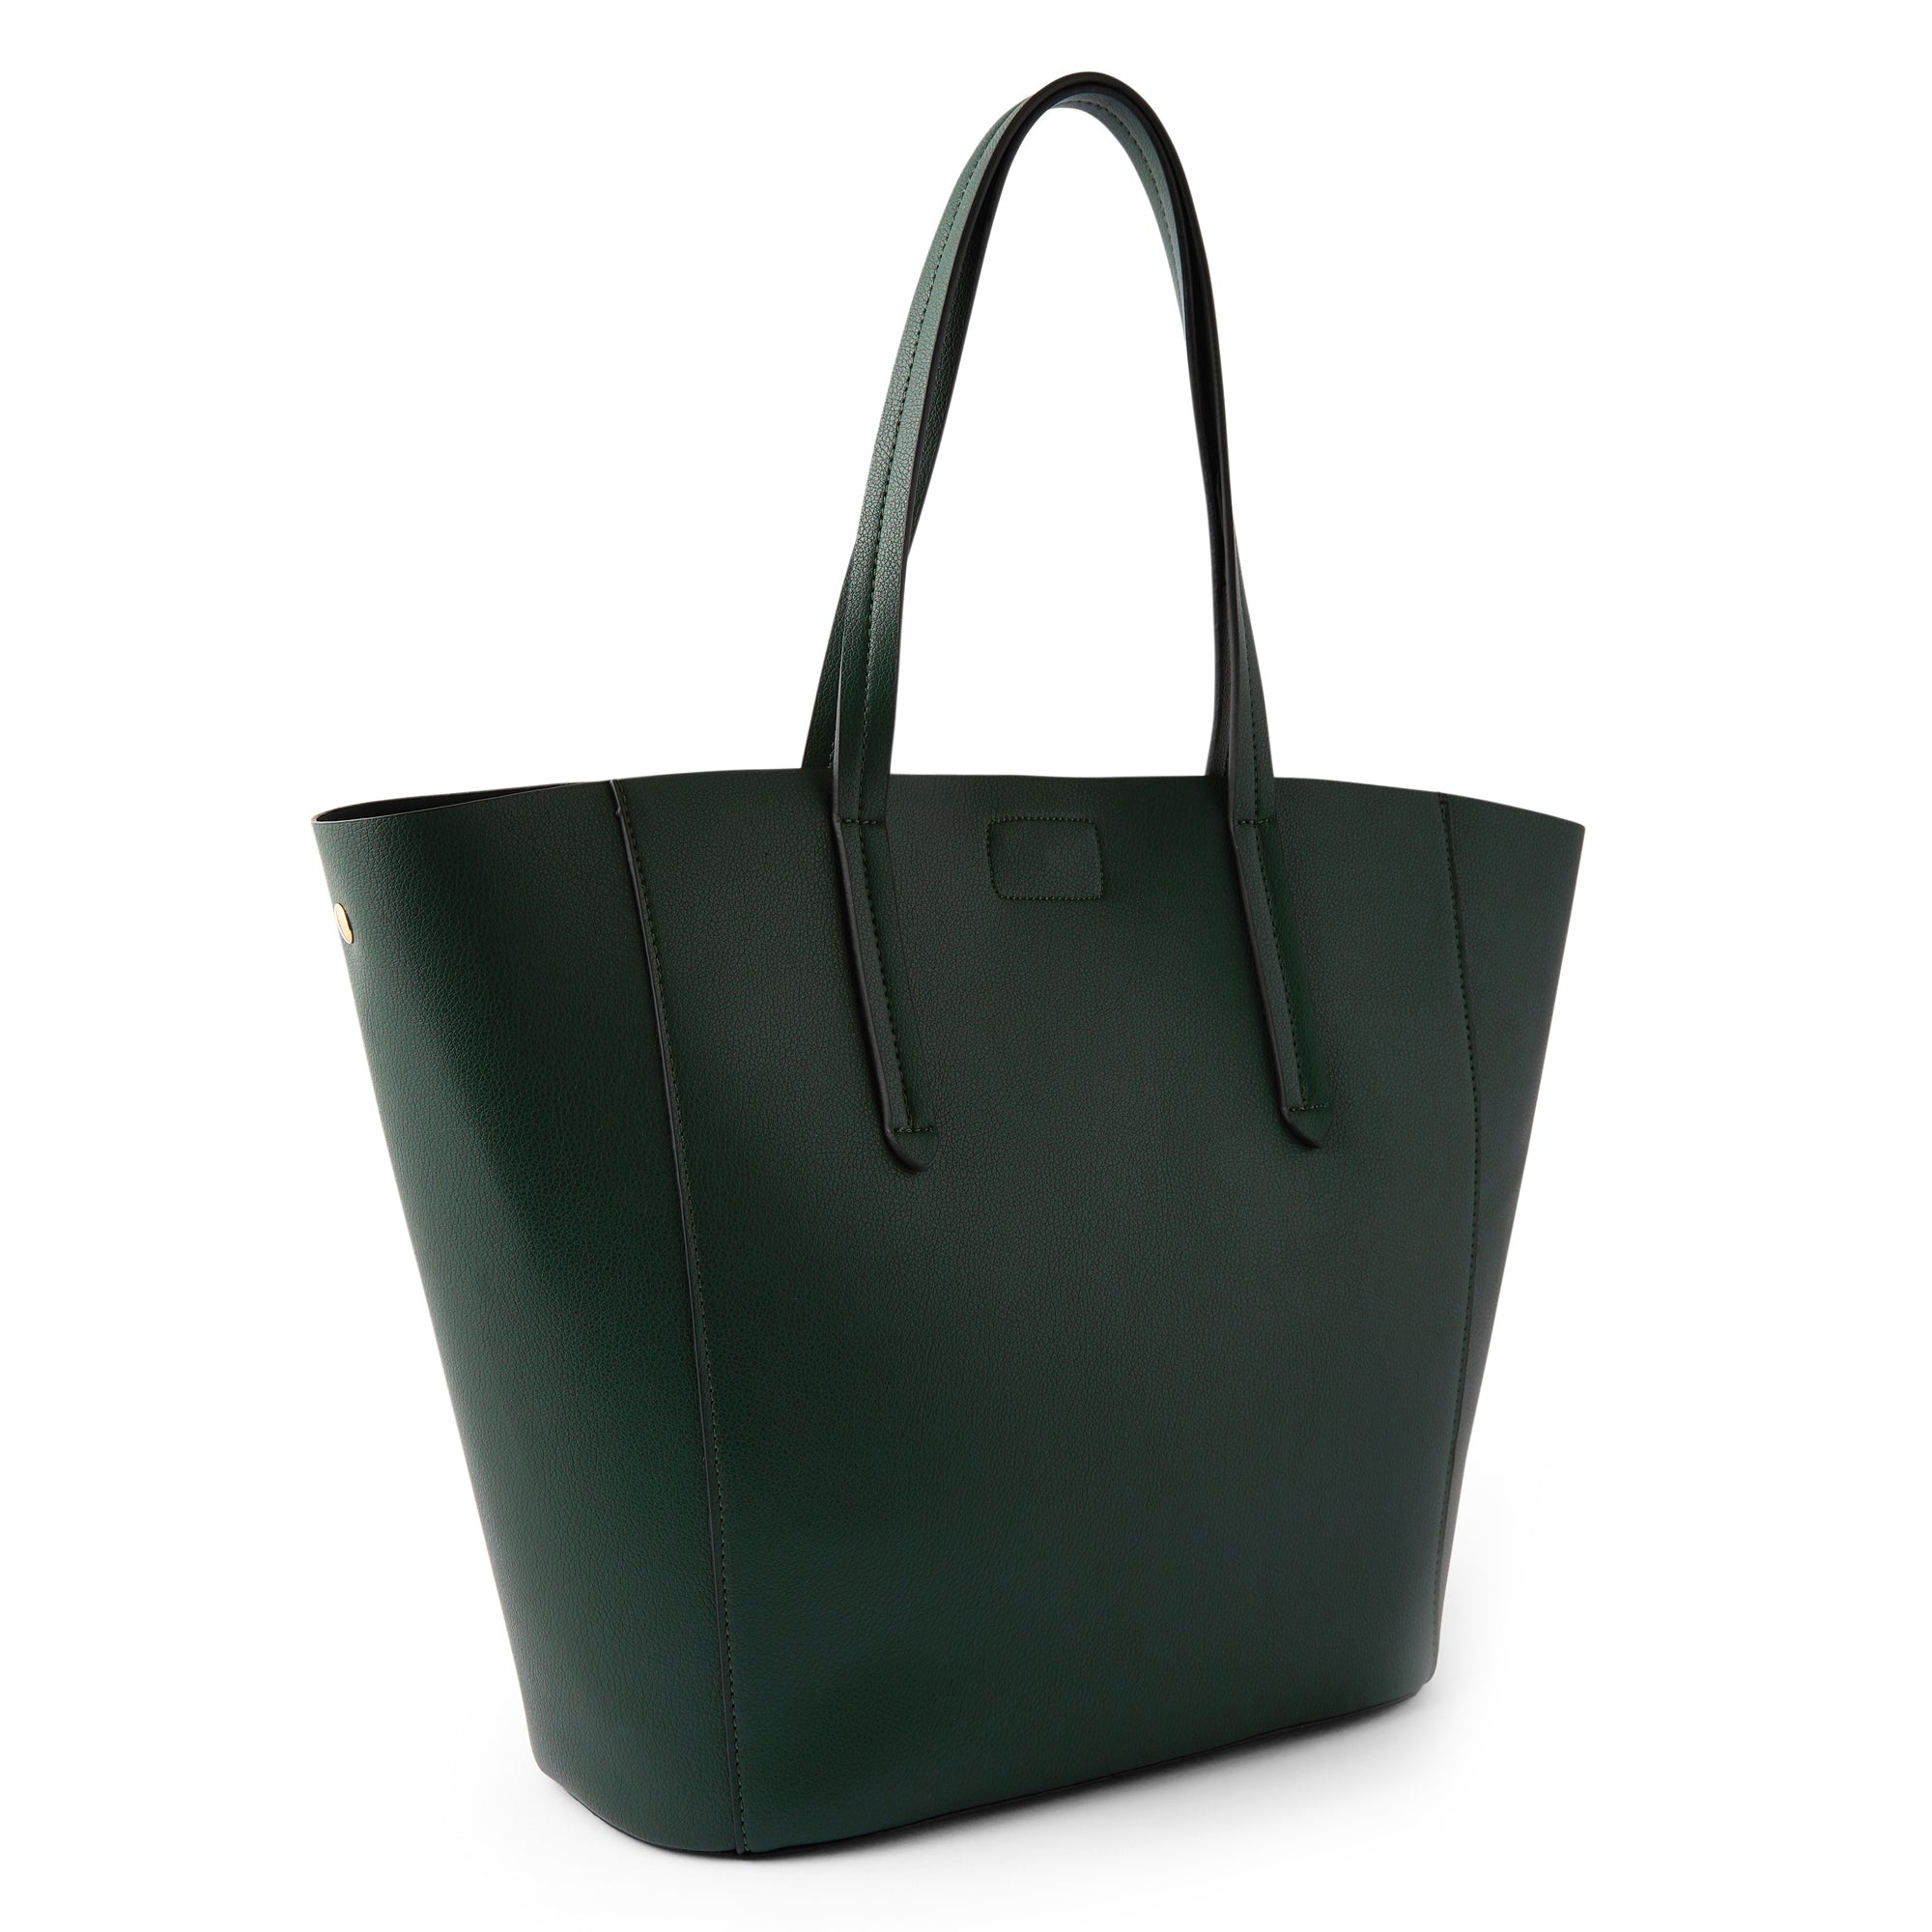 Accessorize London Women's Faux Leather Kayle Curve Tote Bag